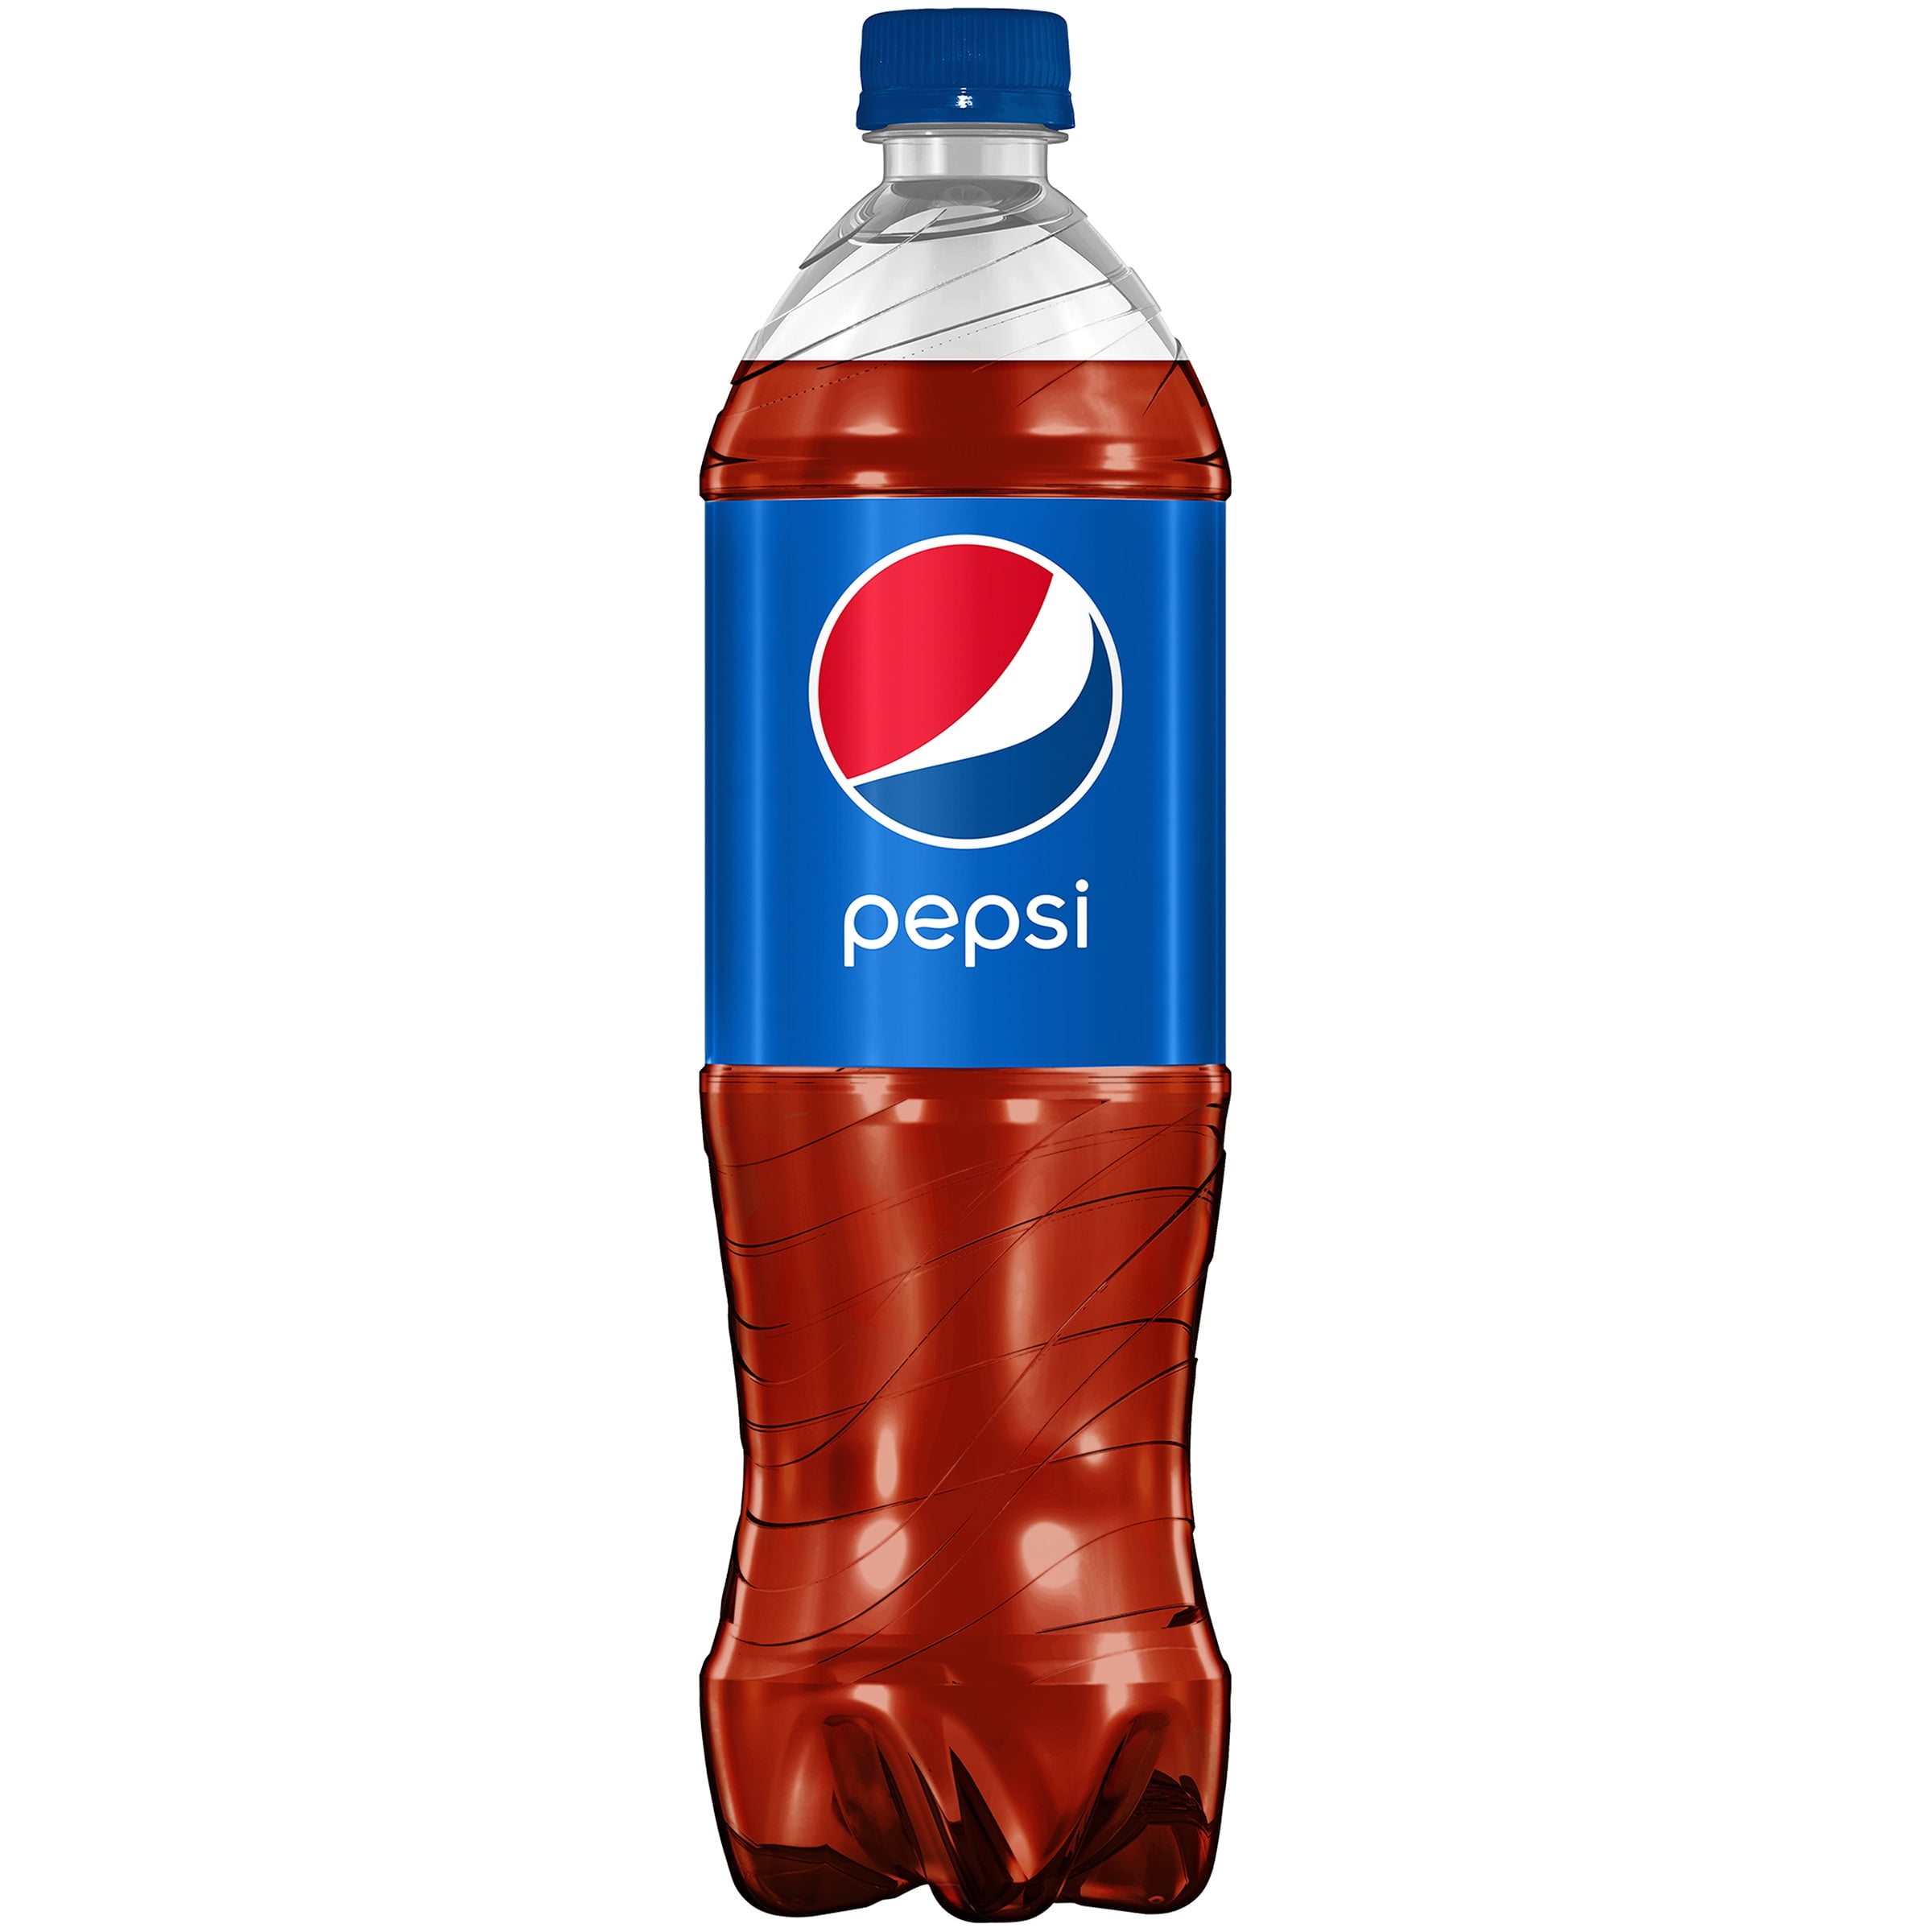 Pepsi Cola Soda Pop, 1.25 Liter Bottle - Walmart.com